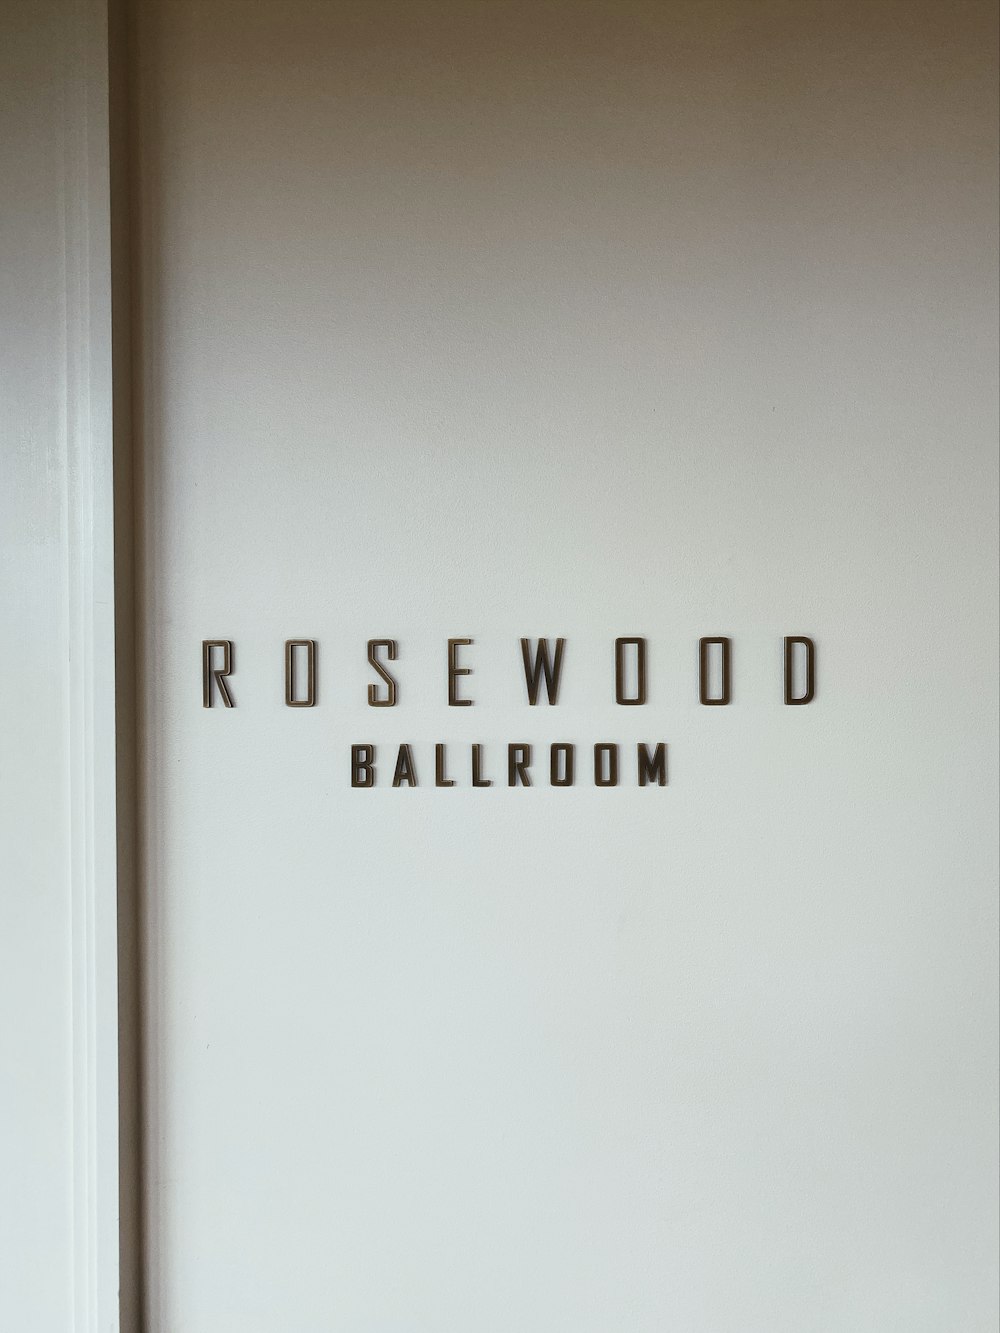 Rosewood Ballroom signage